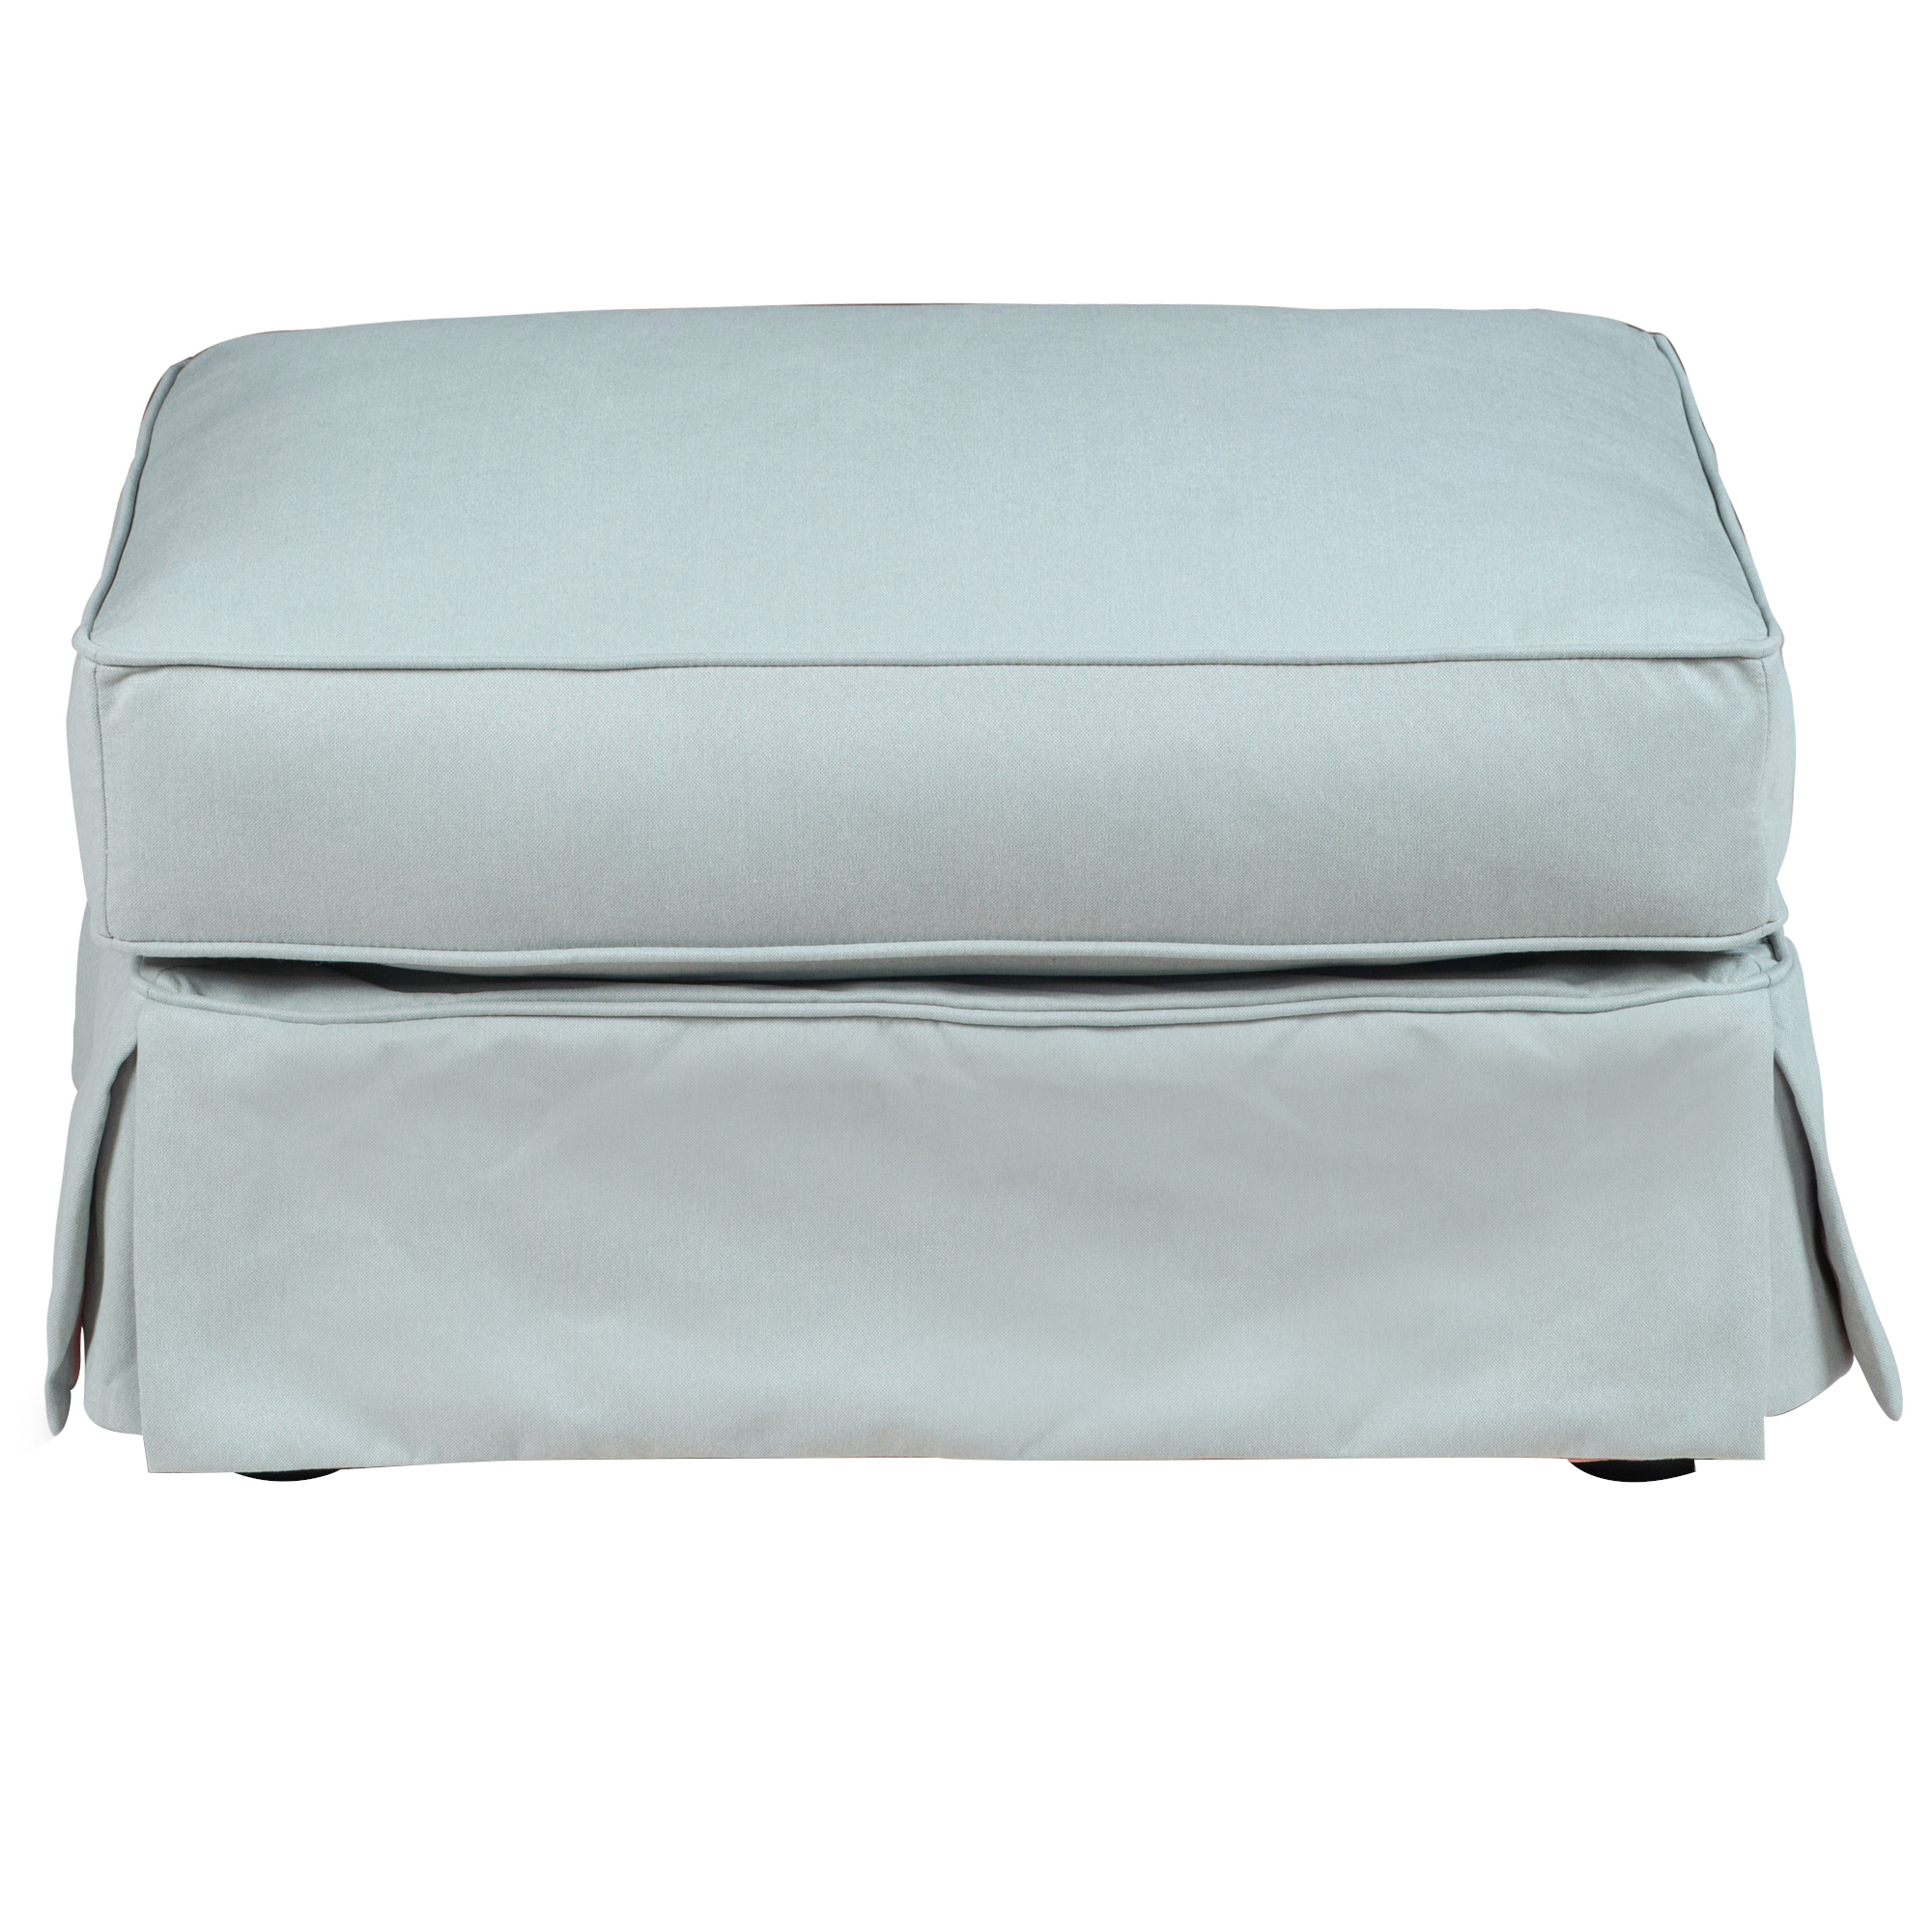 Horizon Upholstered Pillow Top Ottoman - Aqua Blue